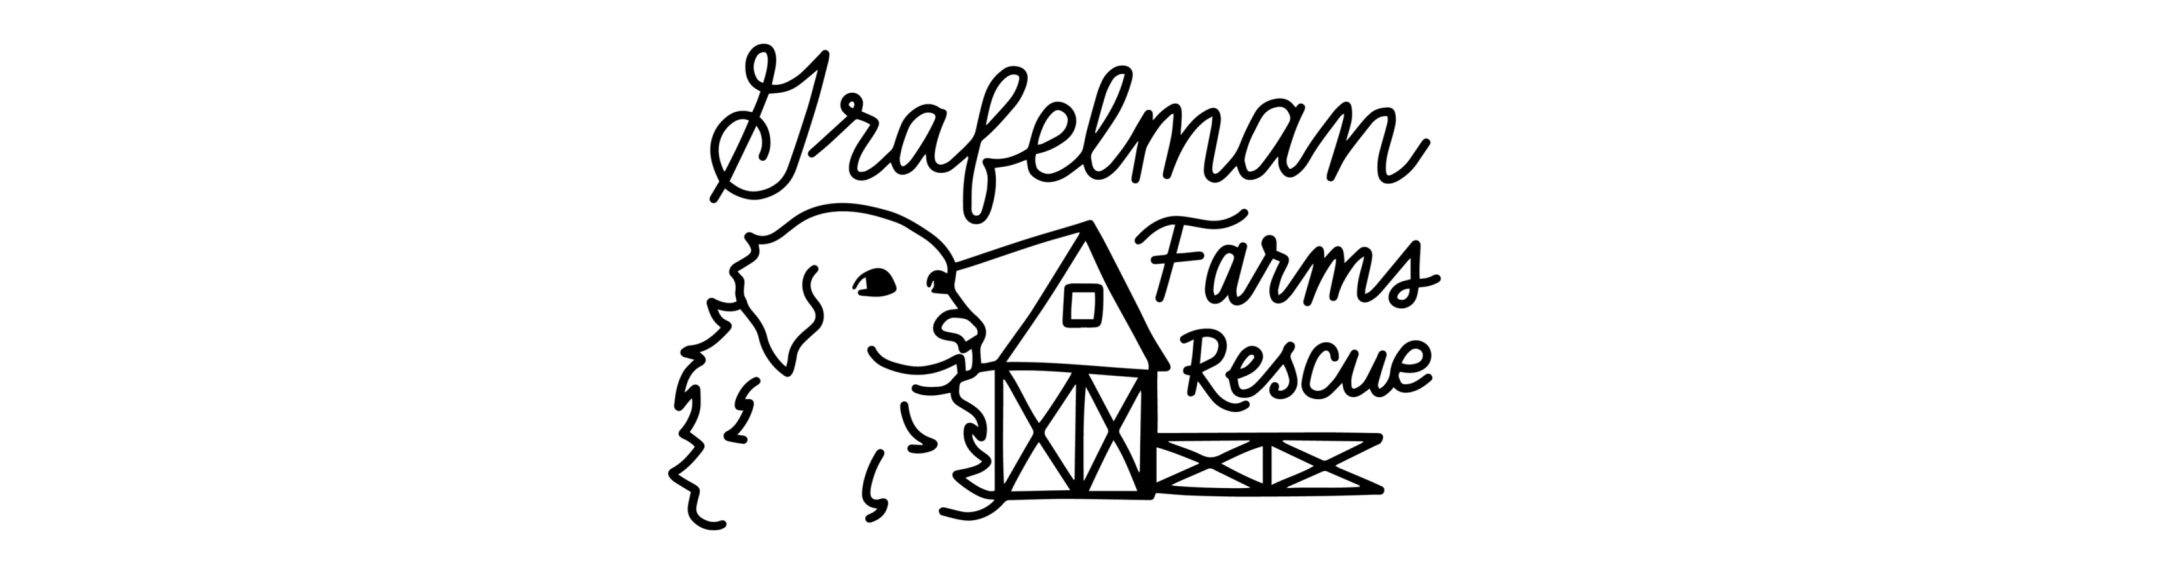 Grafelman Farms Rescue Nfp